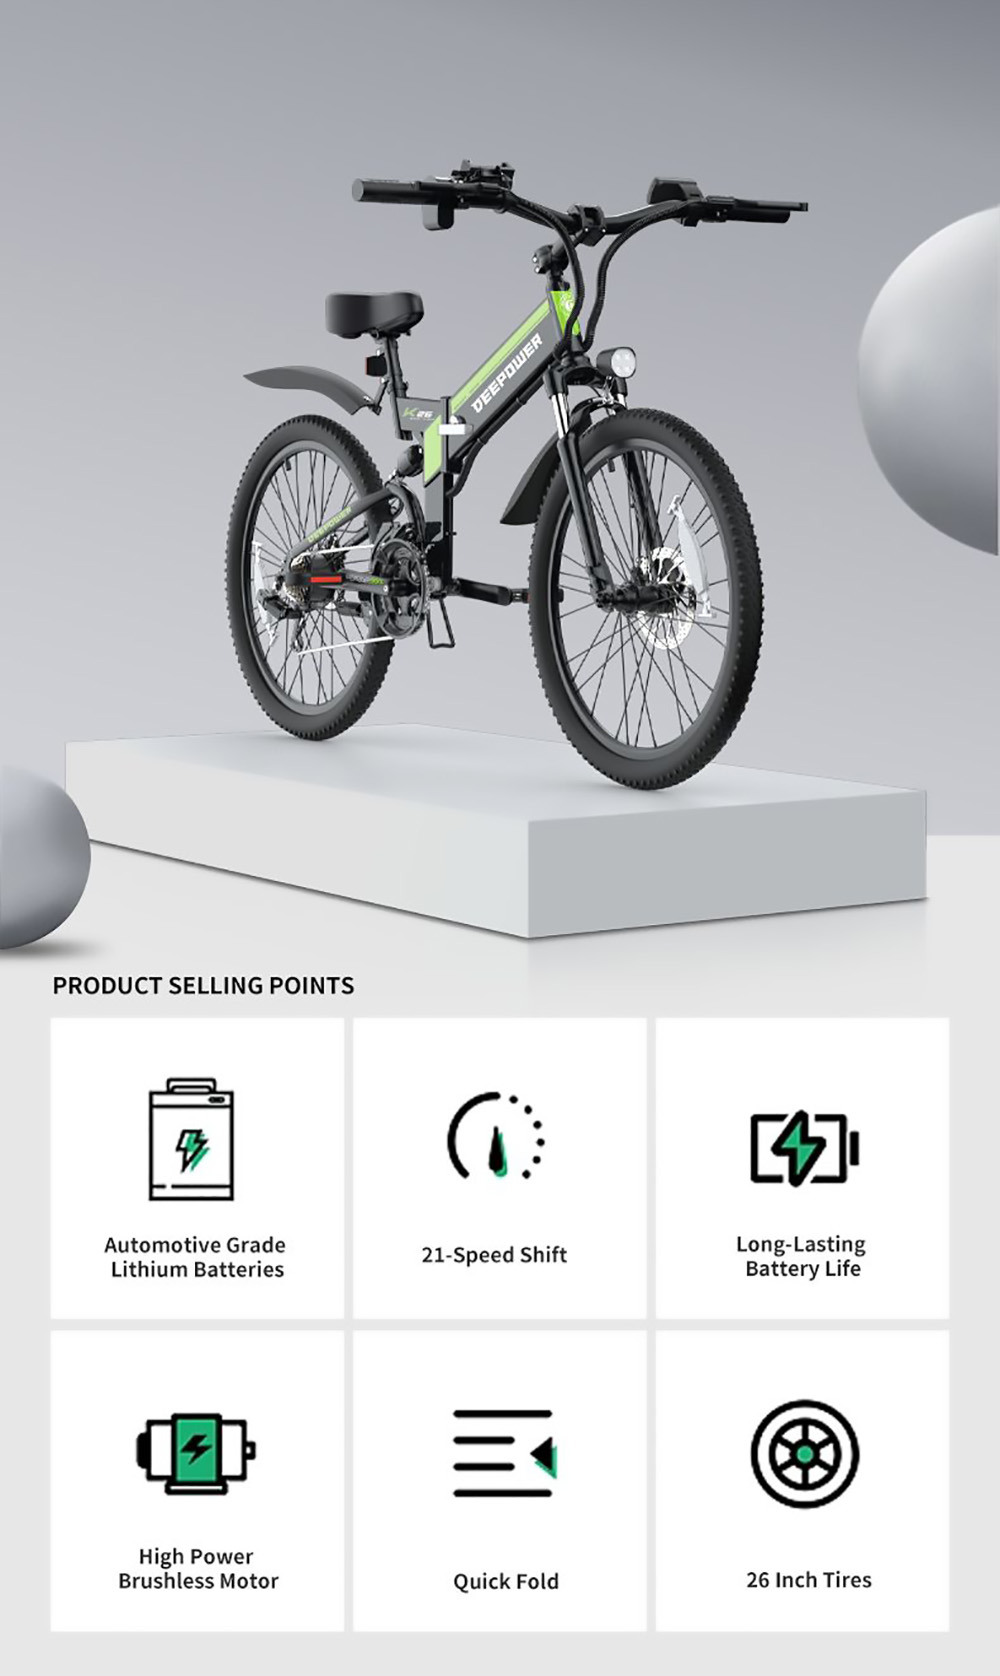 766€ with Coupon for DEEPOWER K26 Electric Folding Bike 26 Inch Tire - EU 🇪🇺 - GEEKBUYING